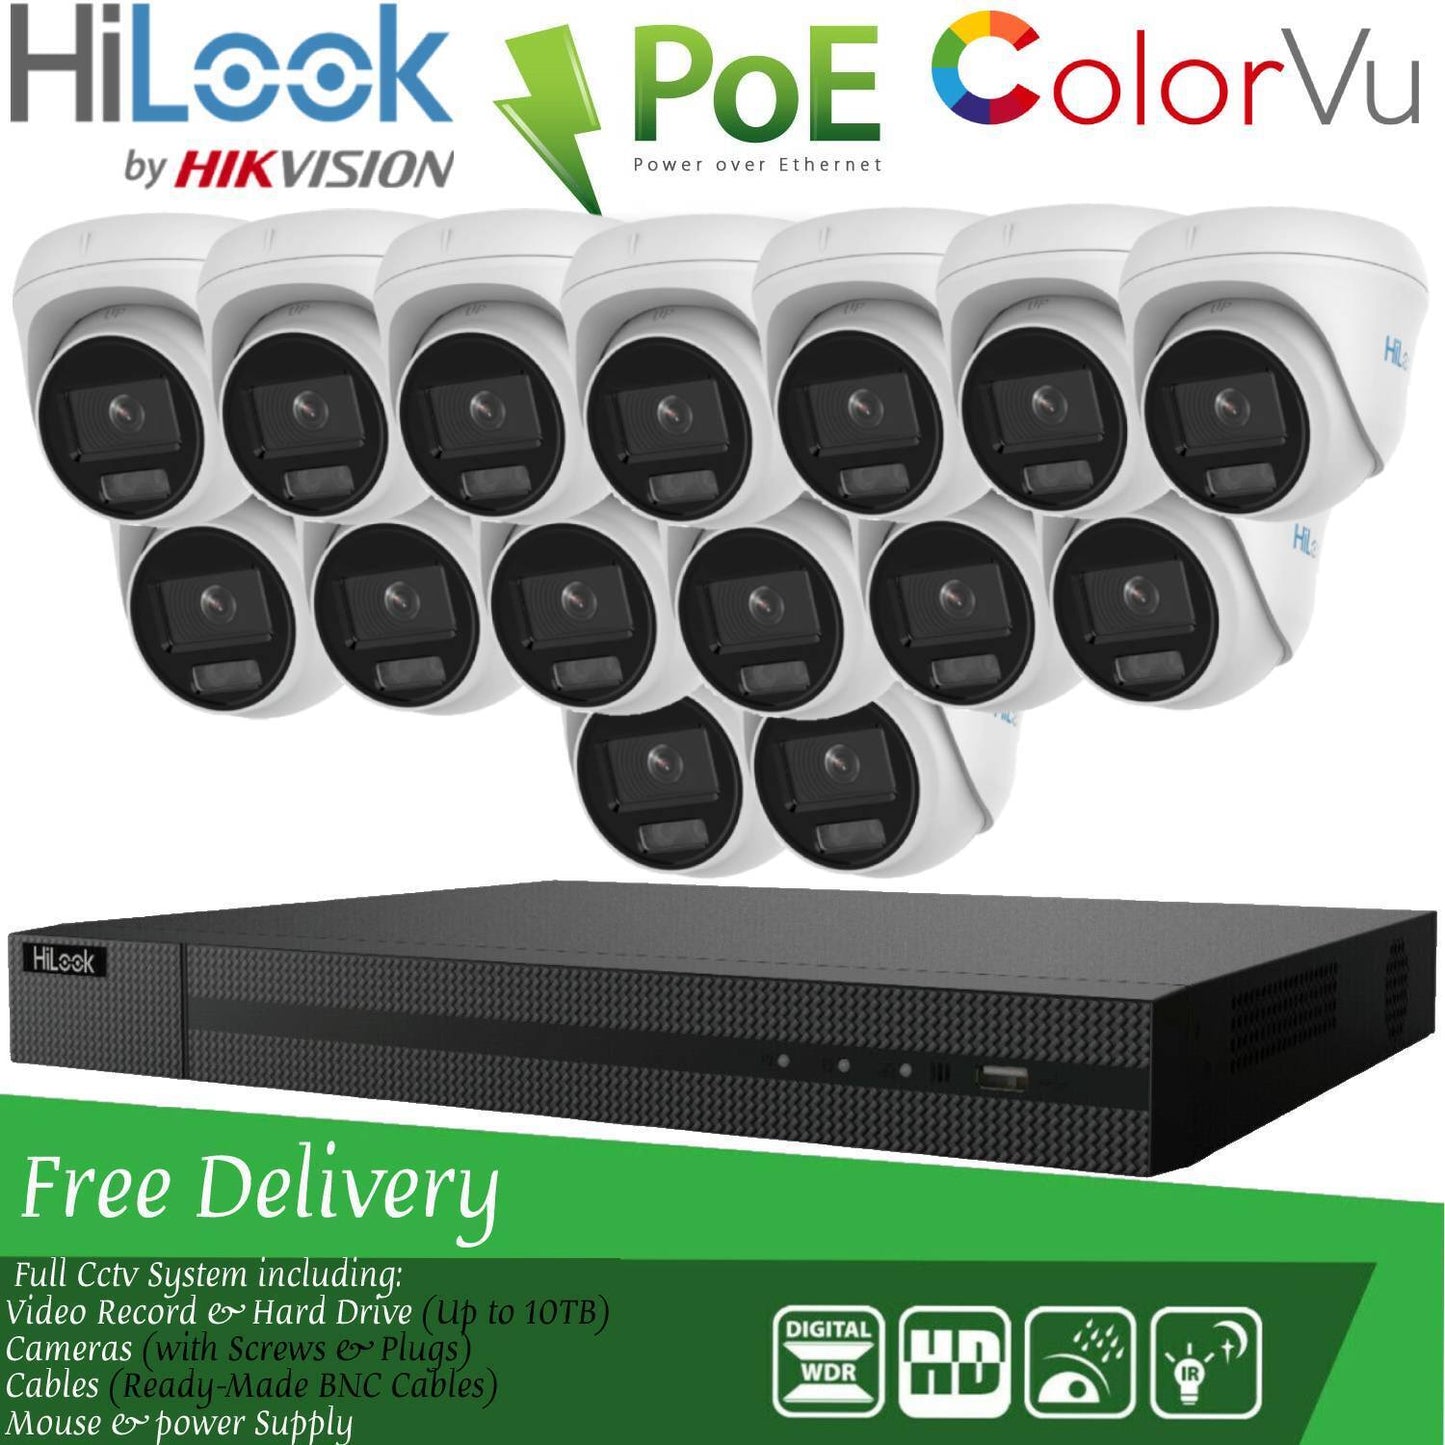 HIKVISION COLORVU POE CCTV SYSTEM IP UHD 8MP NVR 4K 5MP 24/7 COLORVU CAMERA KIT 16CH NVR 15x Cameras (white) 6TB HDD